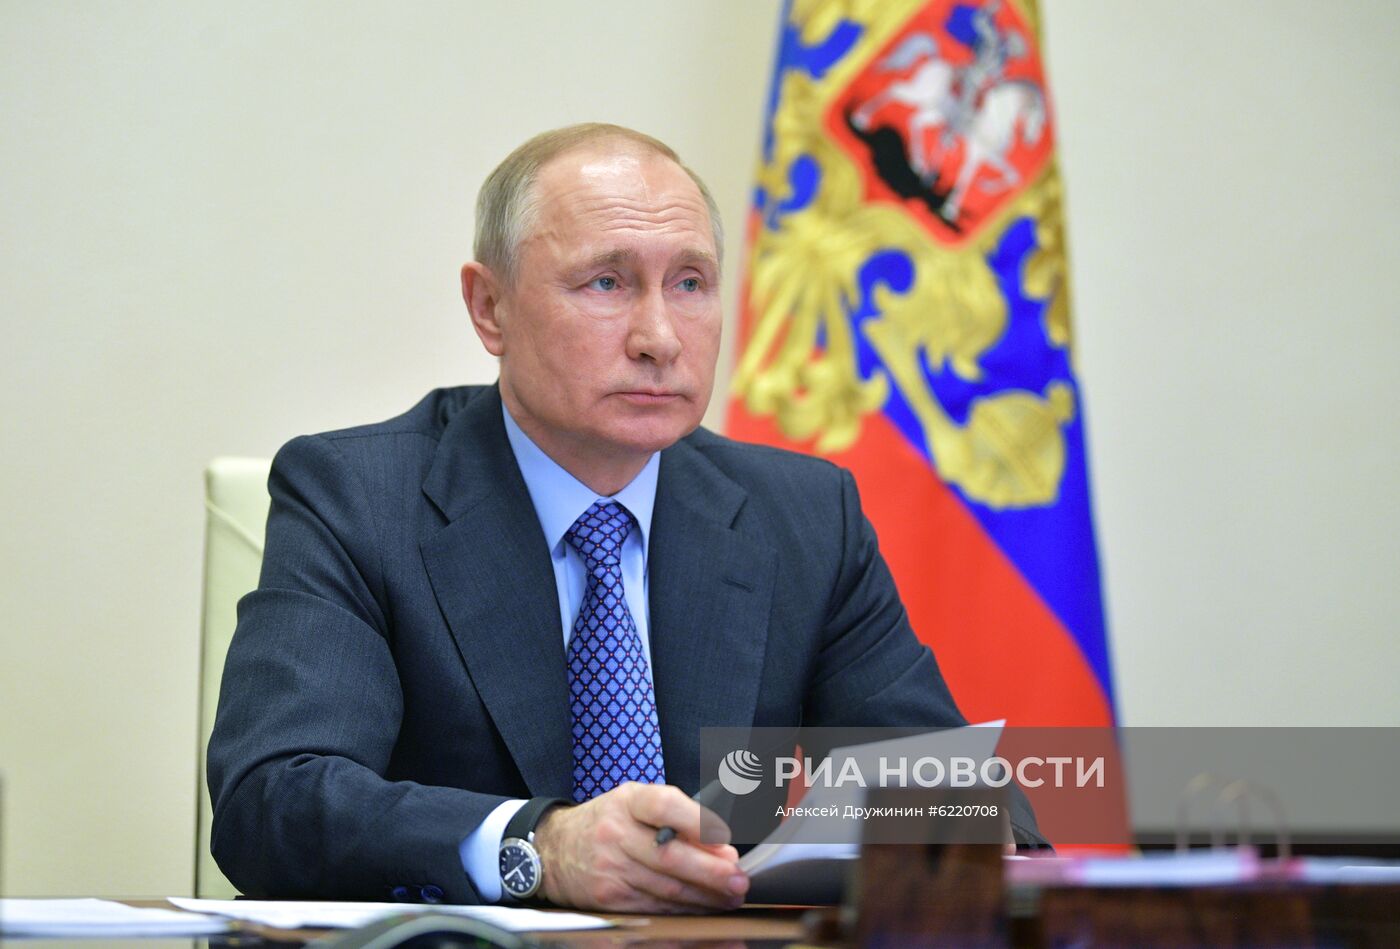 Президент РФ В. Путин принял участие во встрече глав ЕАЭС в формате видеоконференции